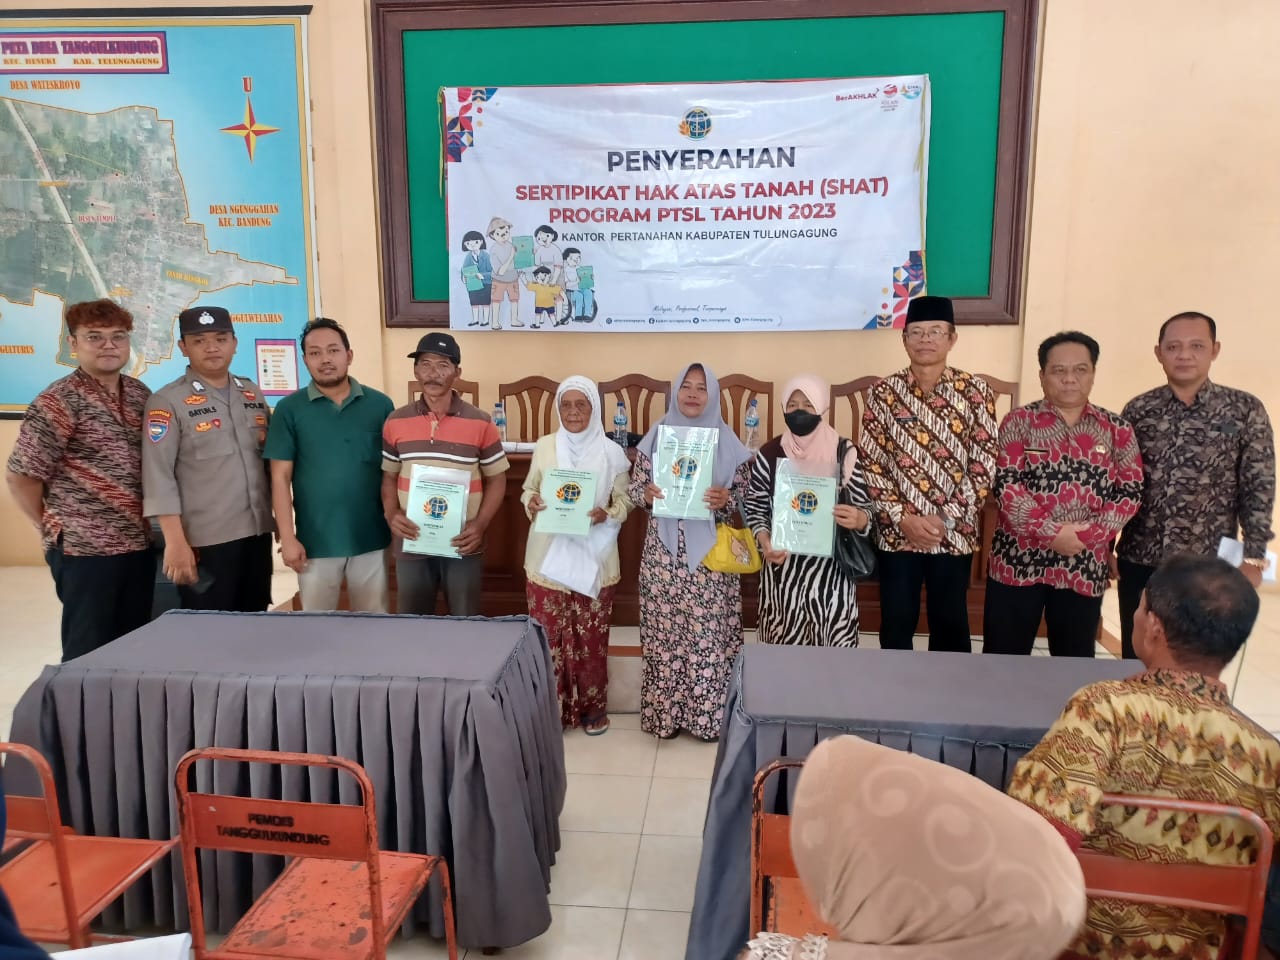 Penyerahan Sertifikat PTSL 2023Disambut Gembira Oleh Masyarakat Desa Tanggulkundung Tulungagung